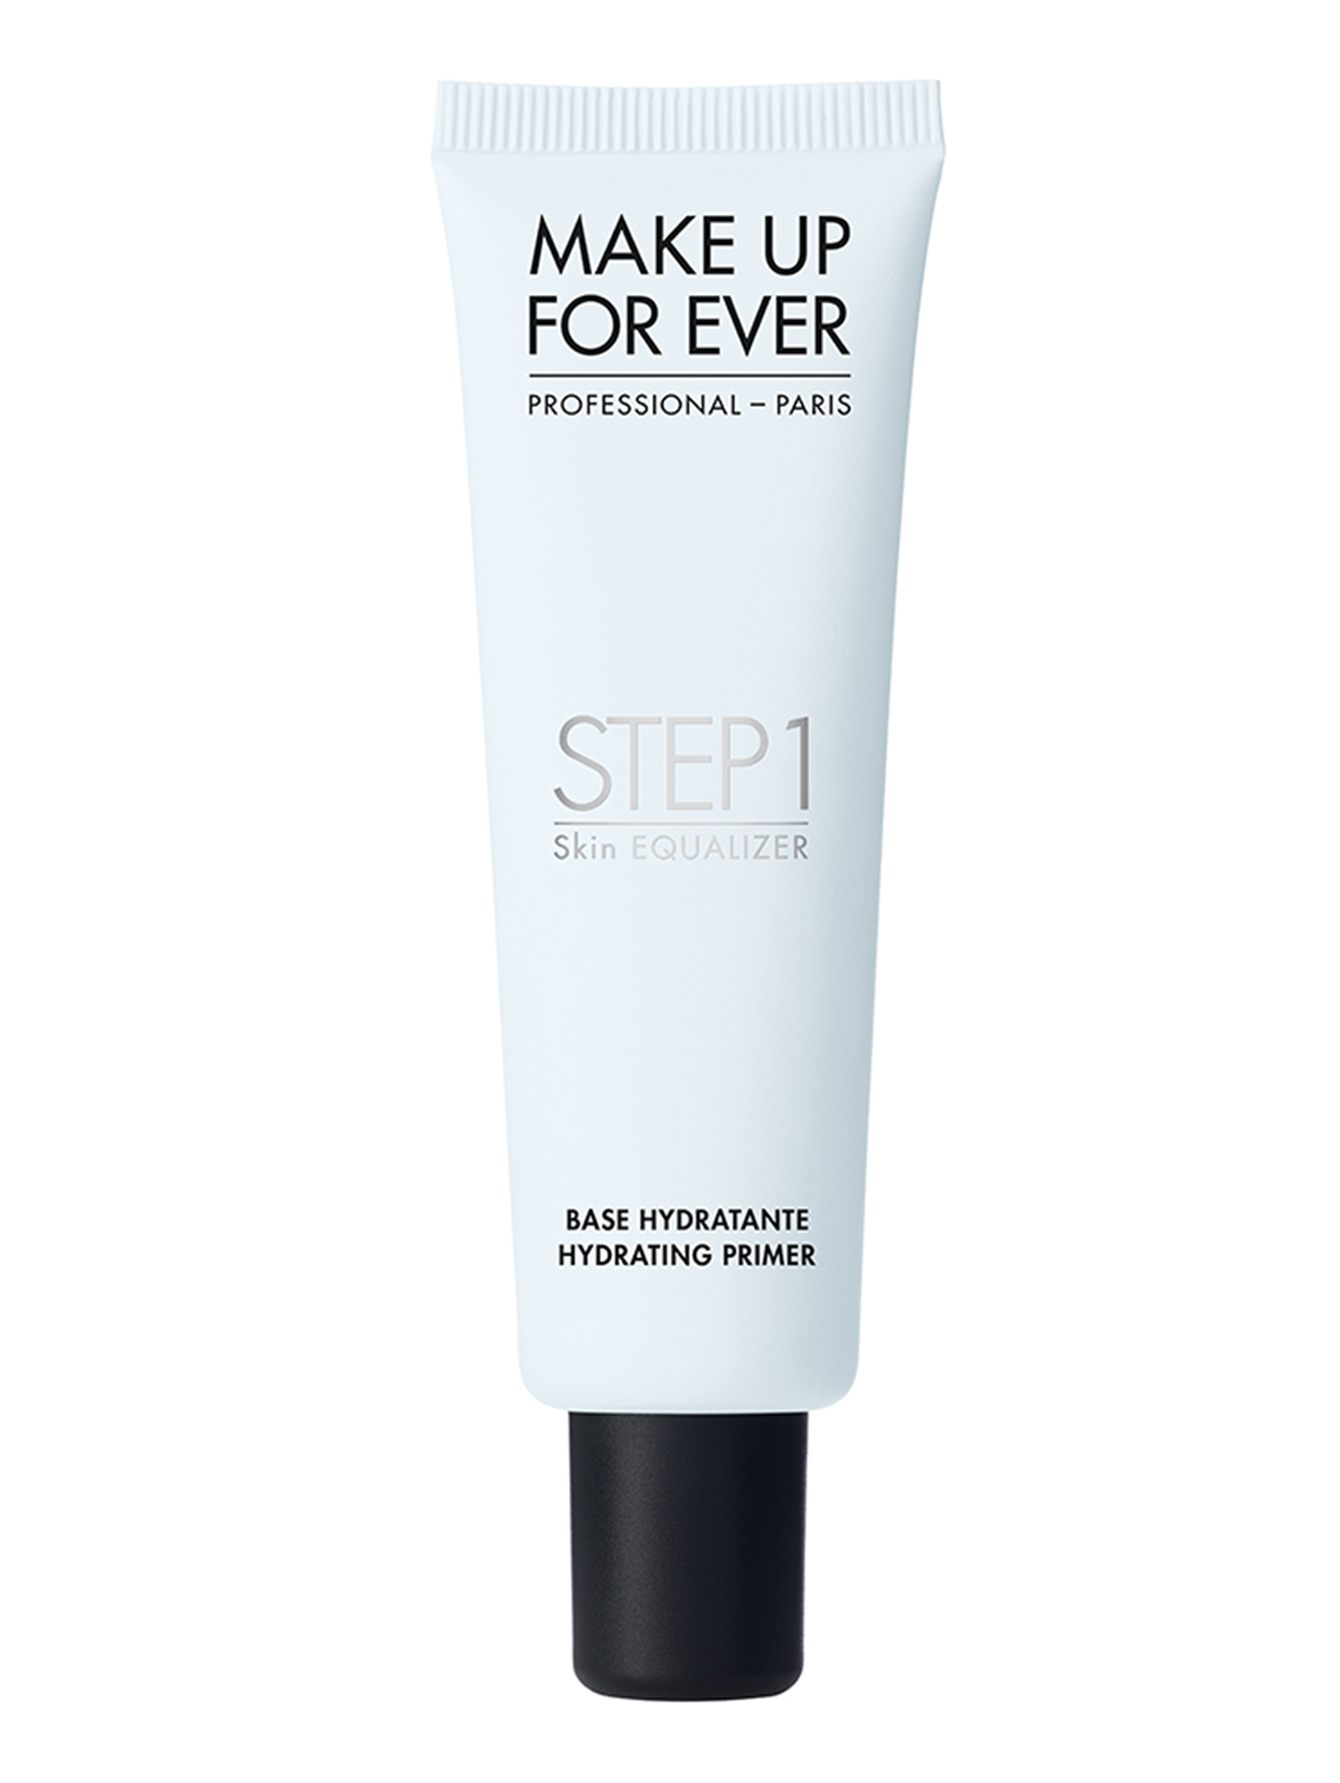 Увлажняющая база под макияж STEP 1 SKIN EQUALIZER Skin Care - Общий вид